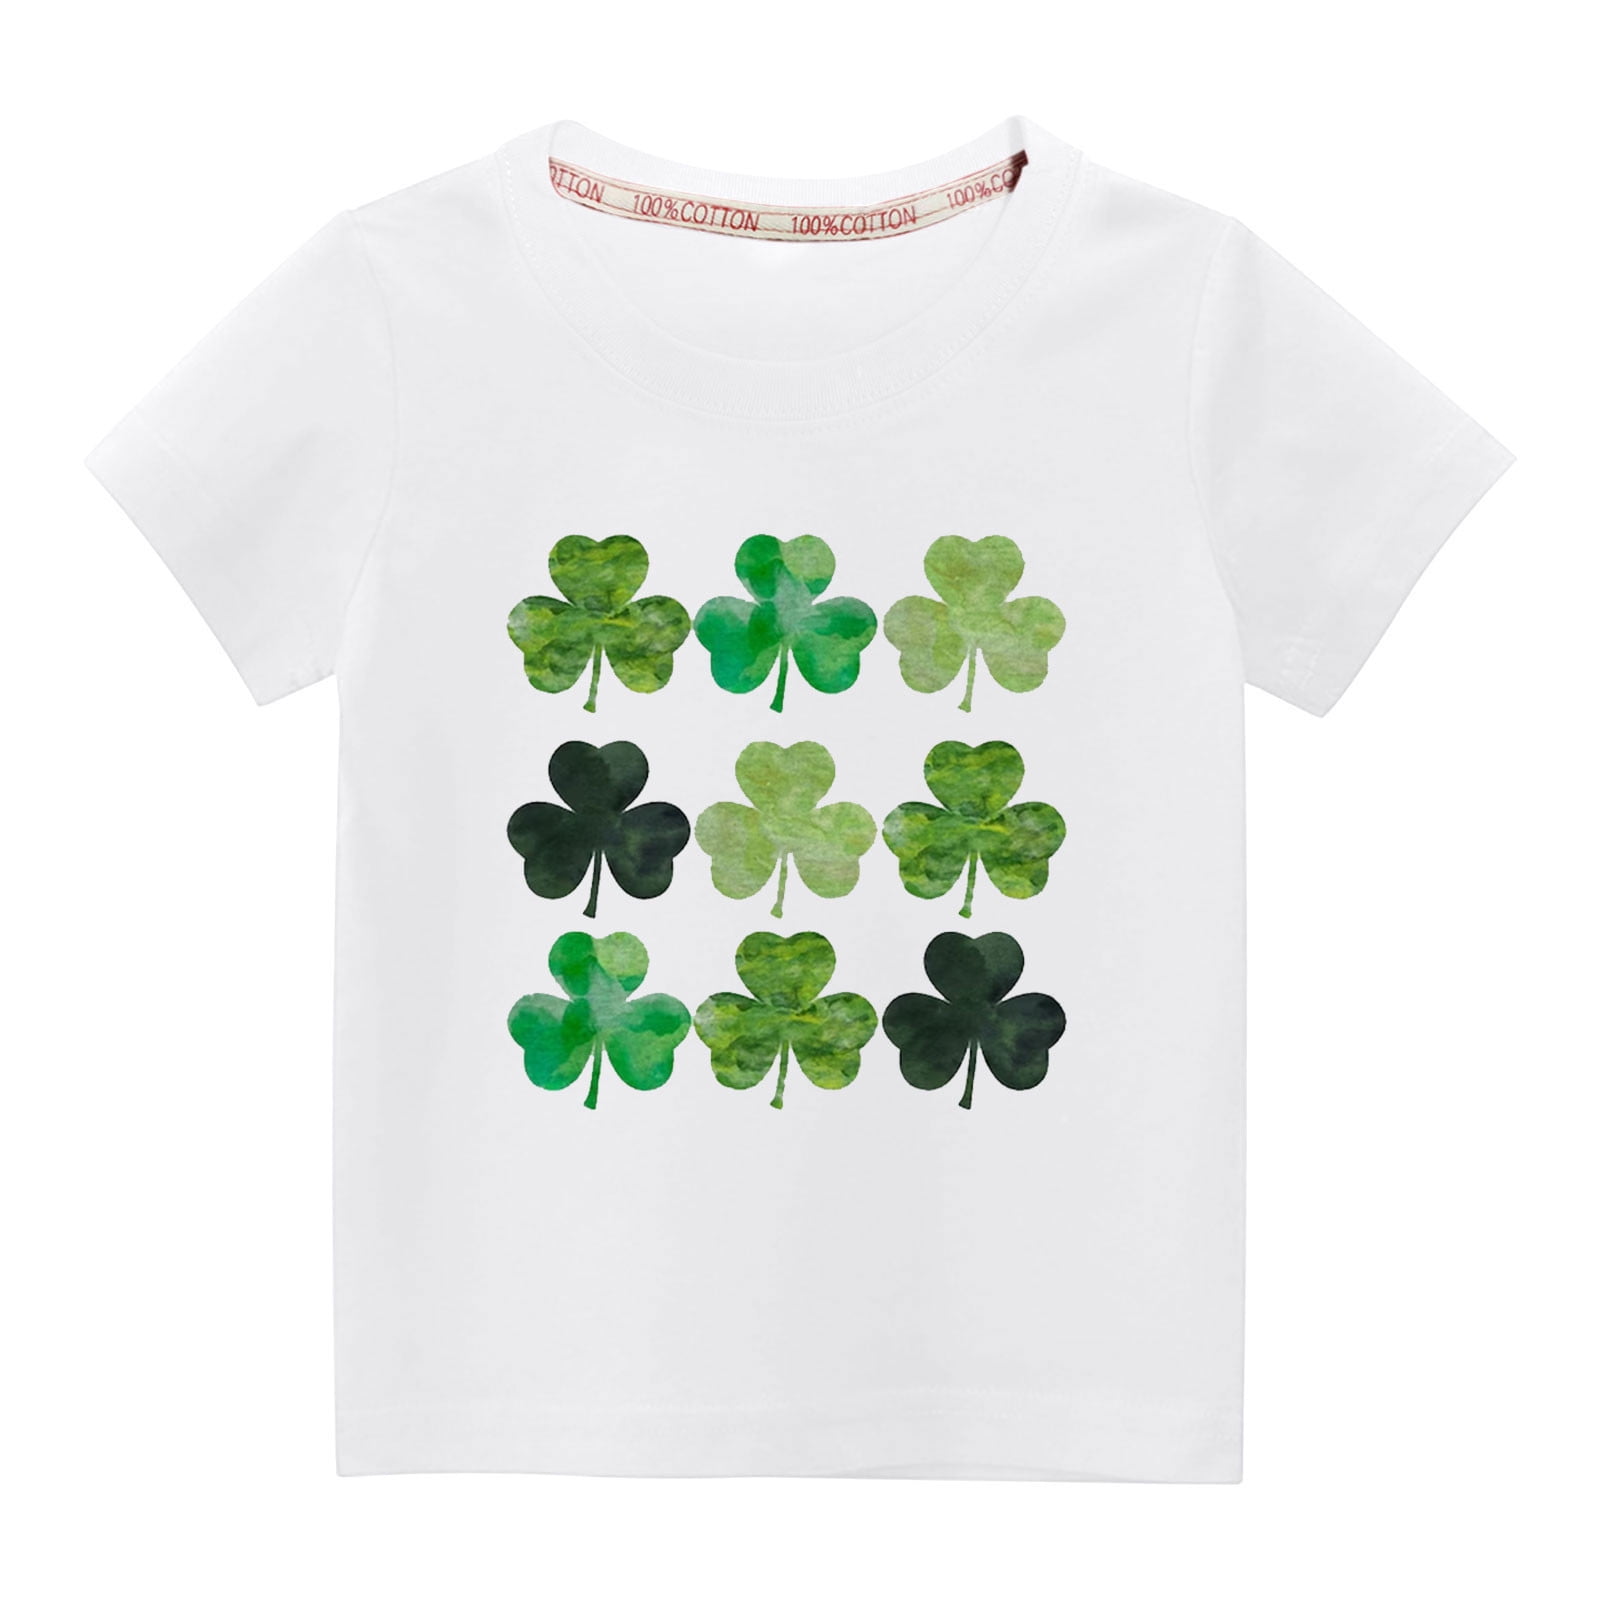 SBYOJLPB St. Patrick's Day Shirt Toddler Kids Boys Girls Fashion Cute ...